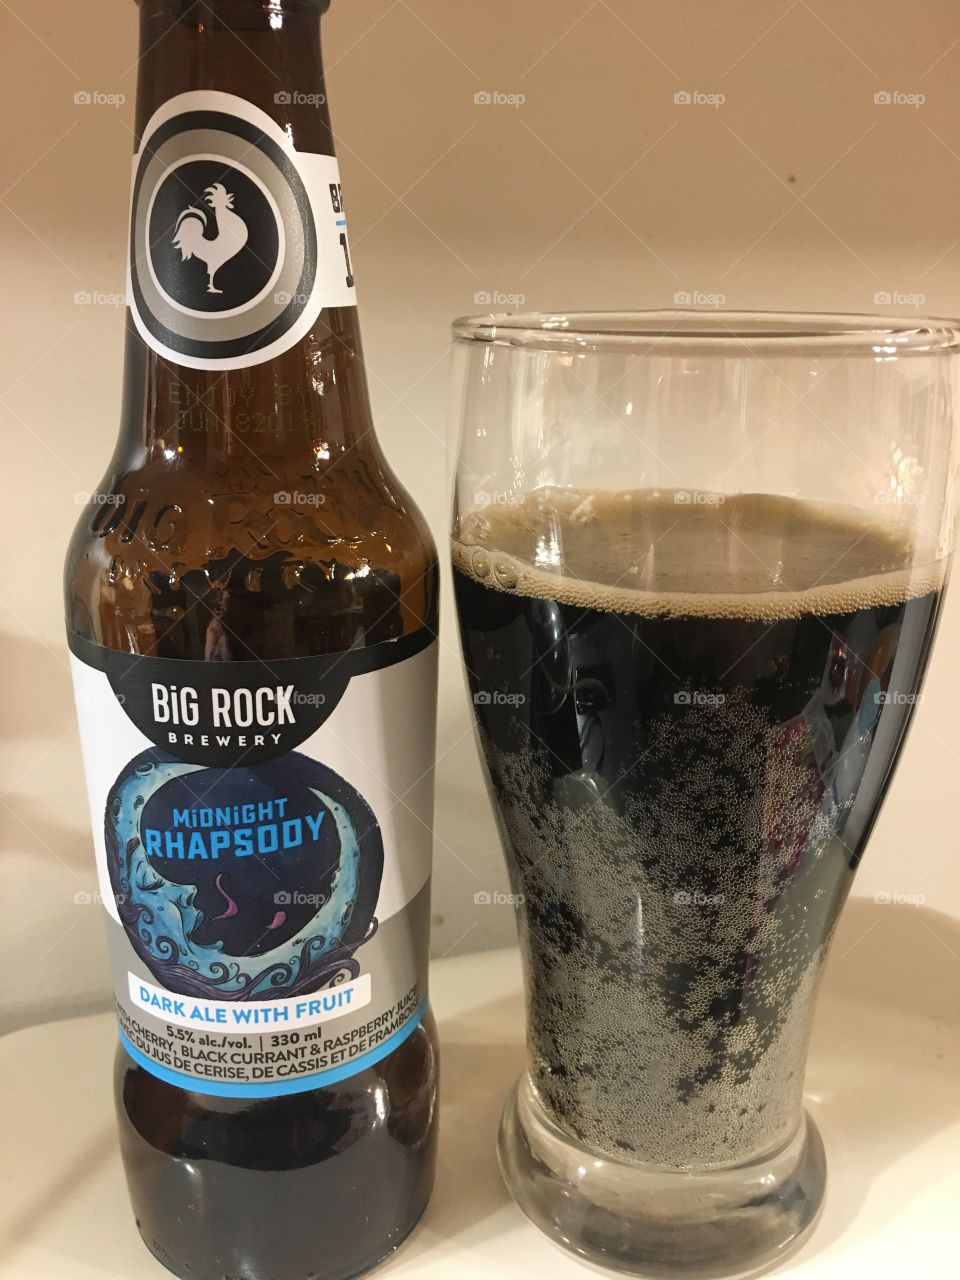 Big Rock Brewery Winter Rhapsody Dark Ale with fruit 